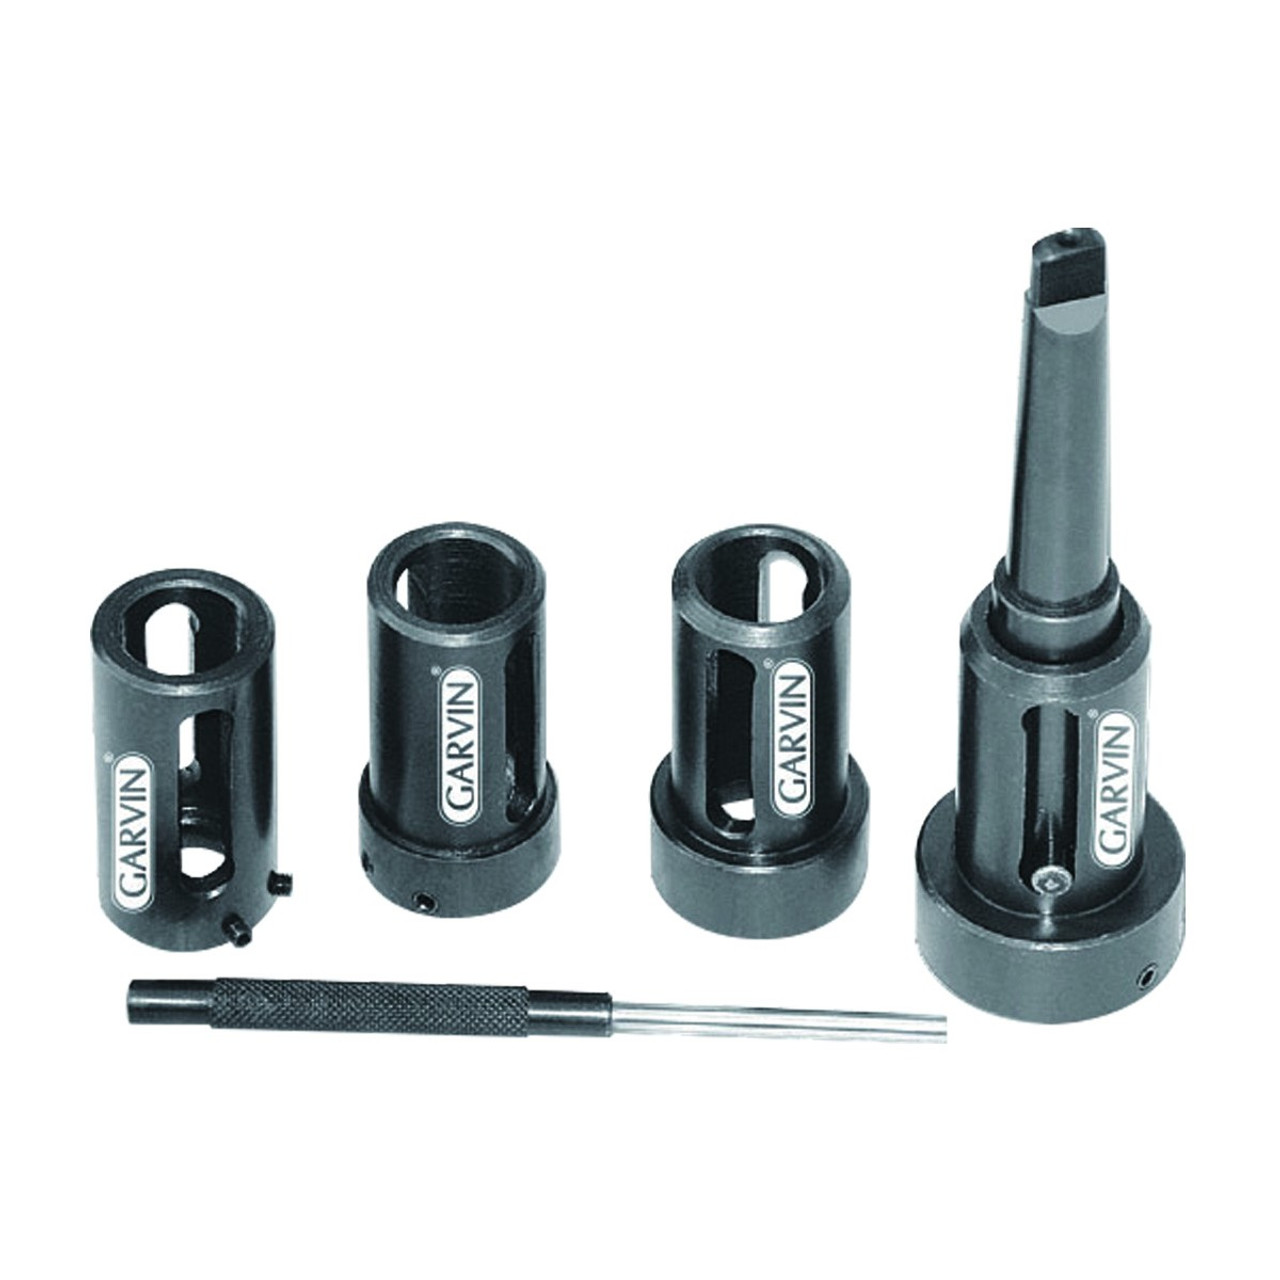 MOTA Tools 39184 Blj1 Tips, Pack of 5, Silver, 25 mm